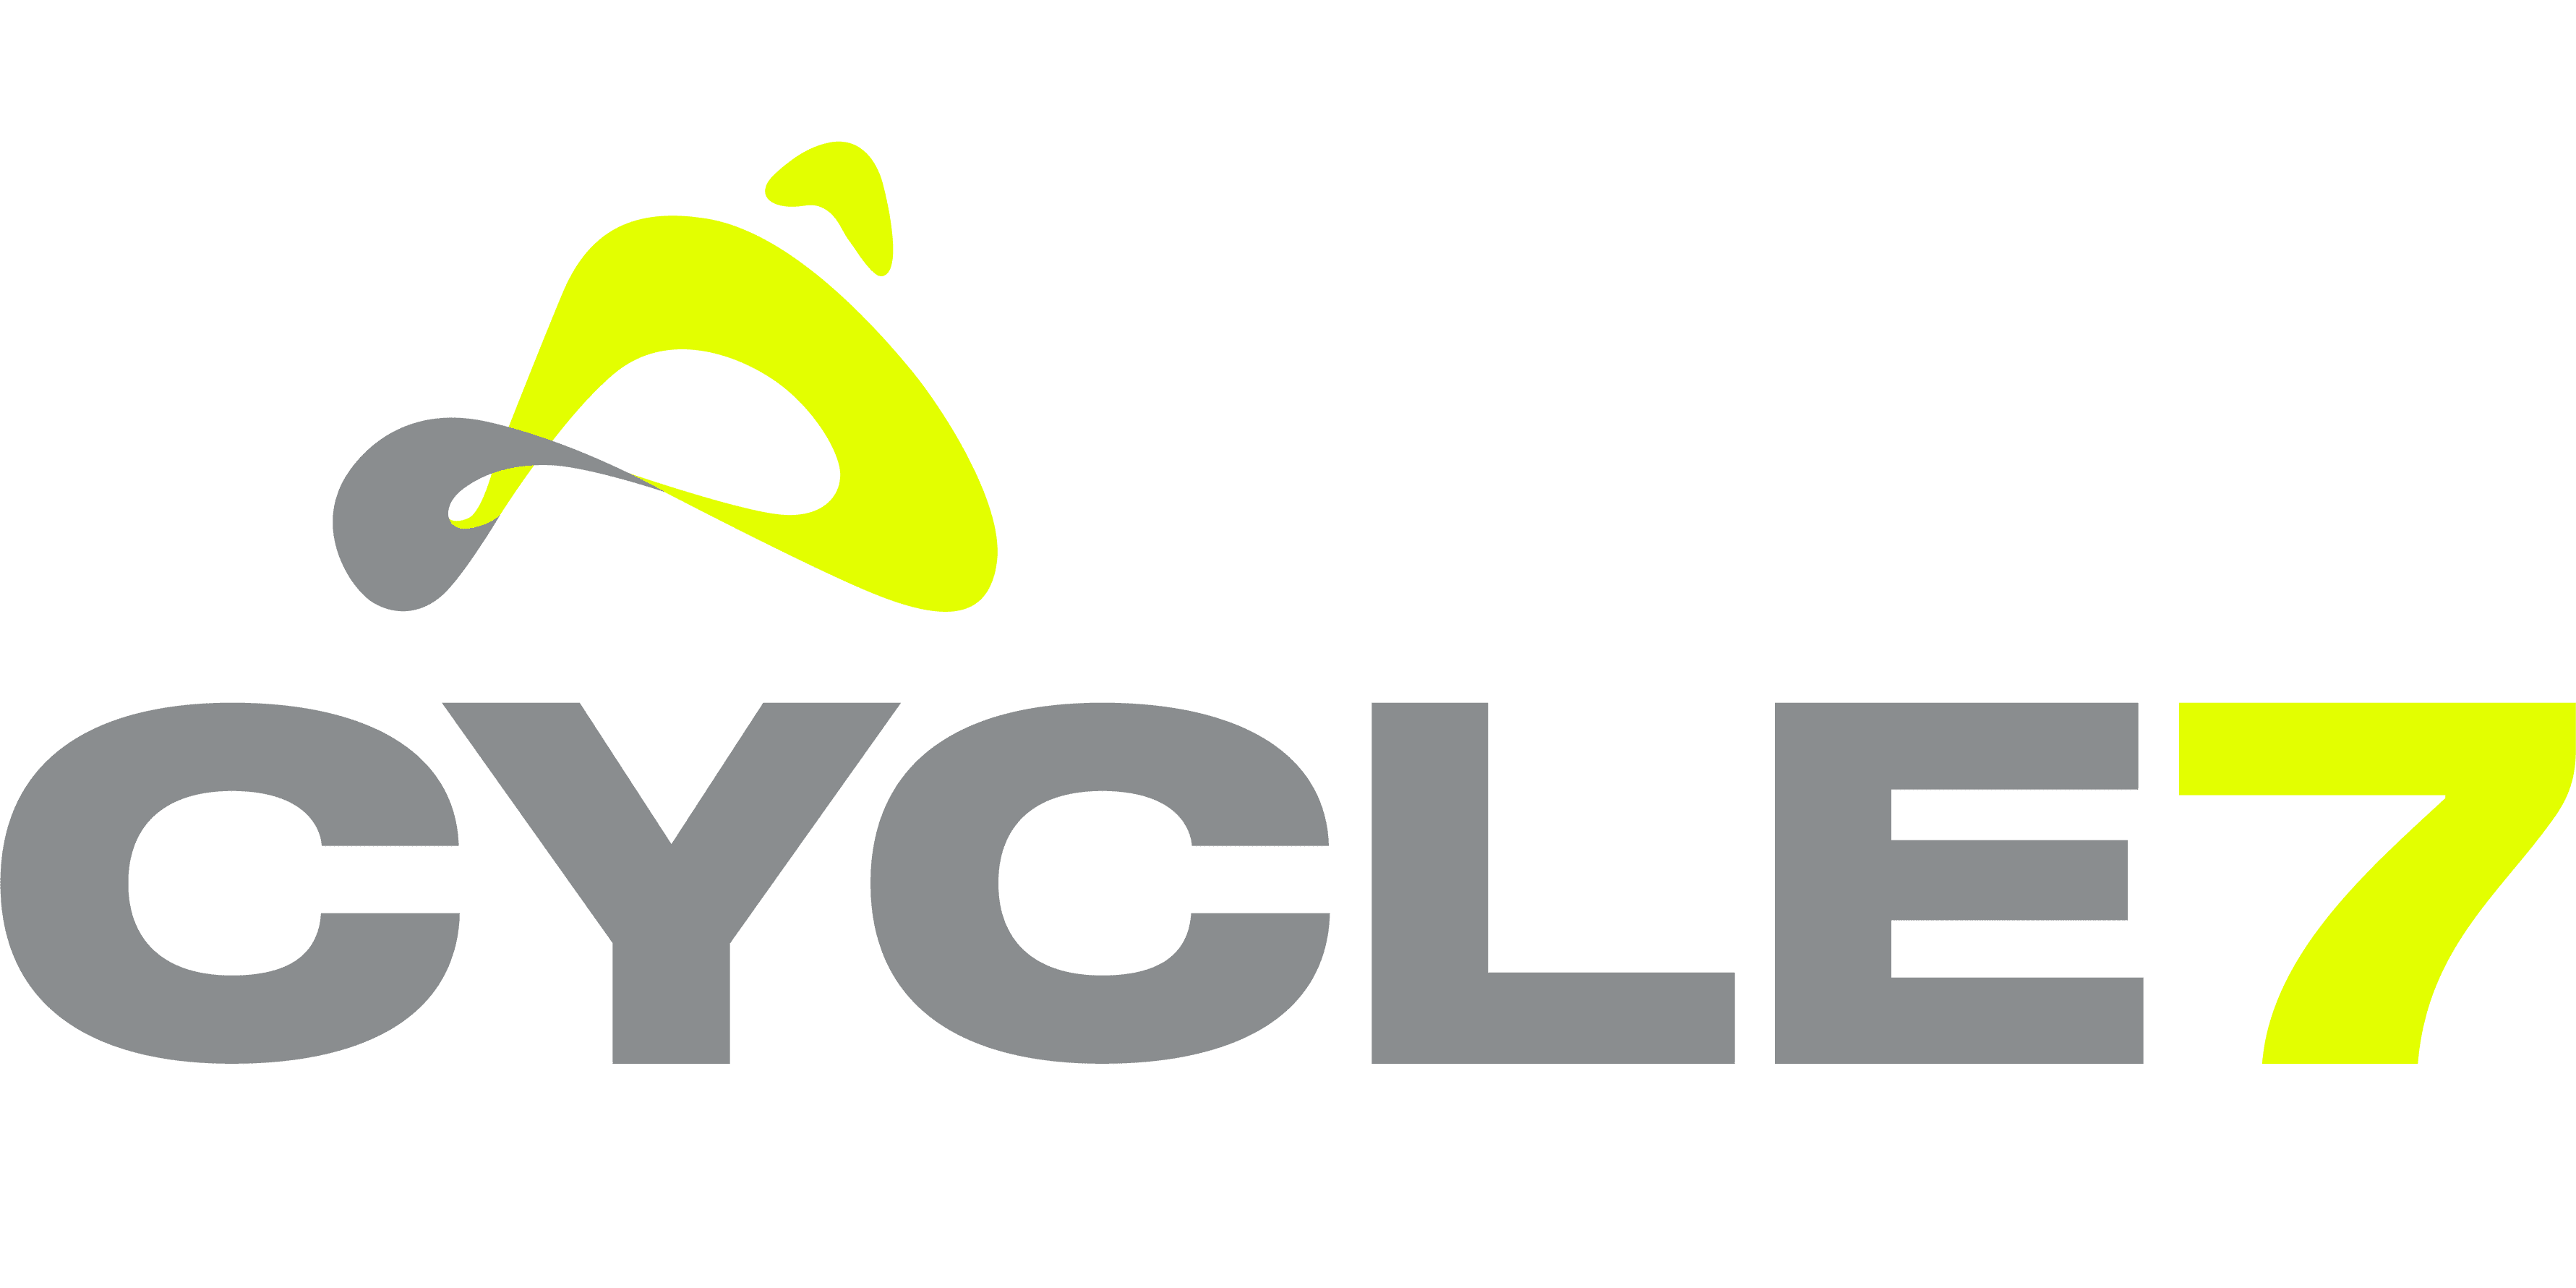 cycle7-lifting-idvisual-2020-logo-amarelo-02-dooca